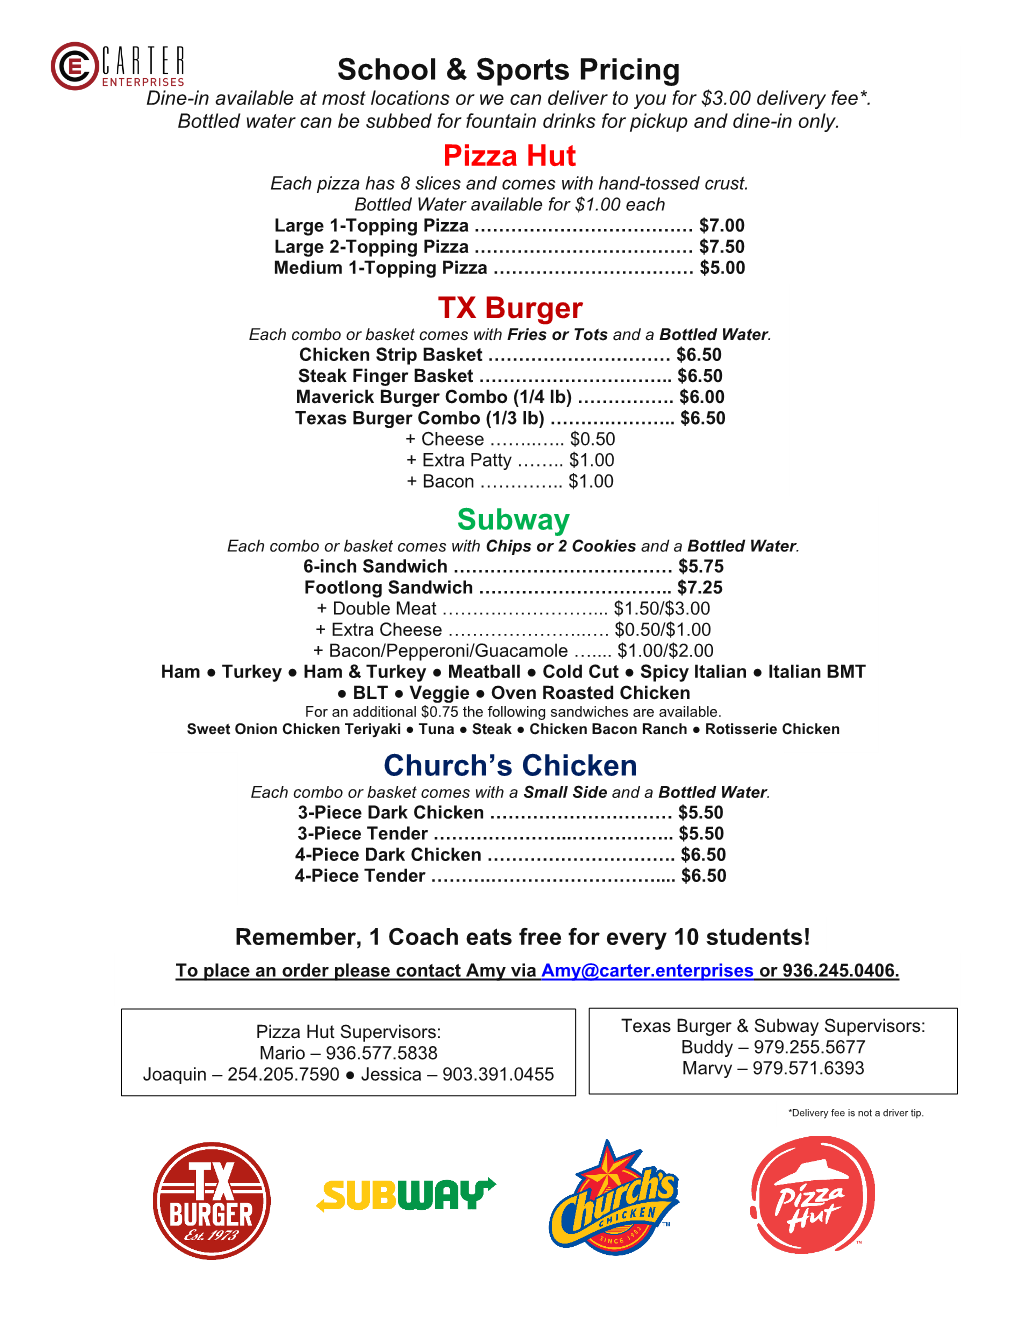 Pizza Hut School & Sports Pricing TX Burger Subway Church's Chicken